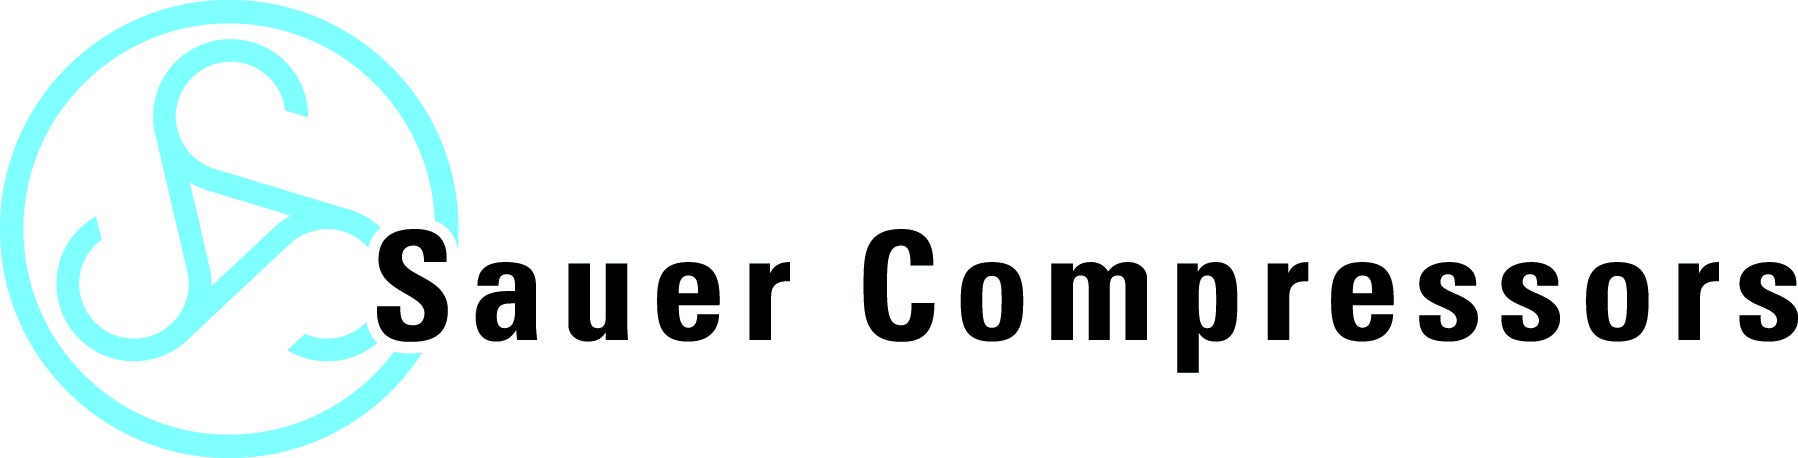 sauer_compressors_logo-min